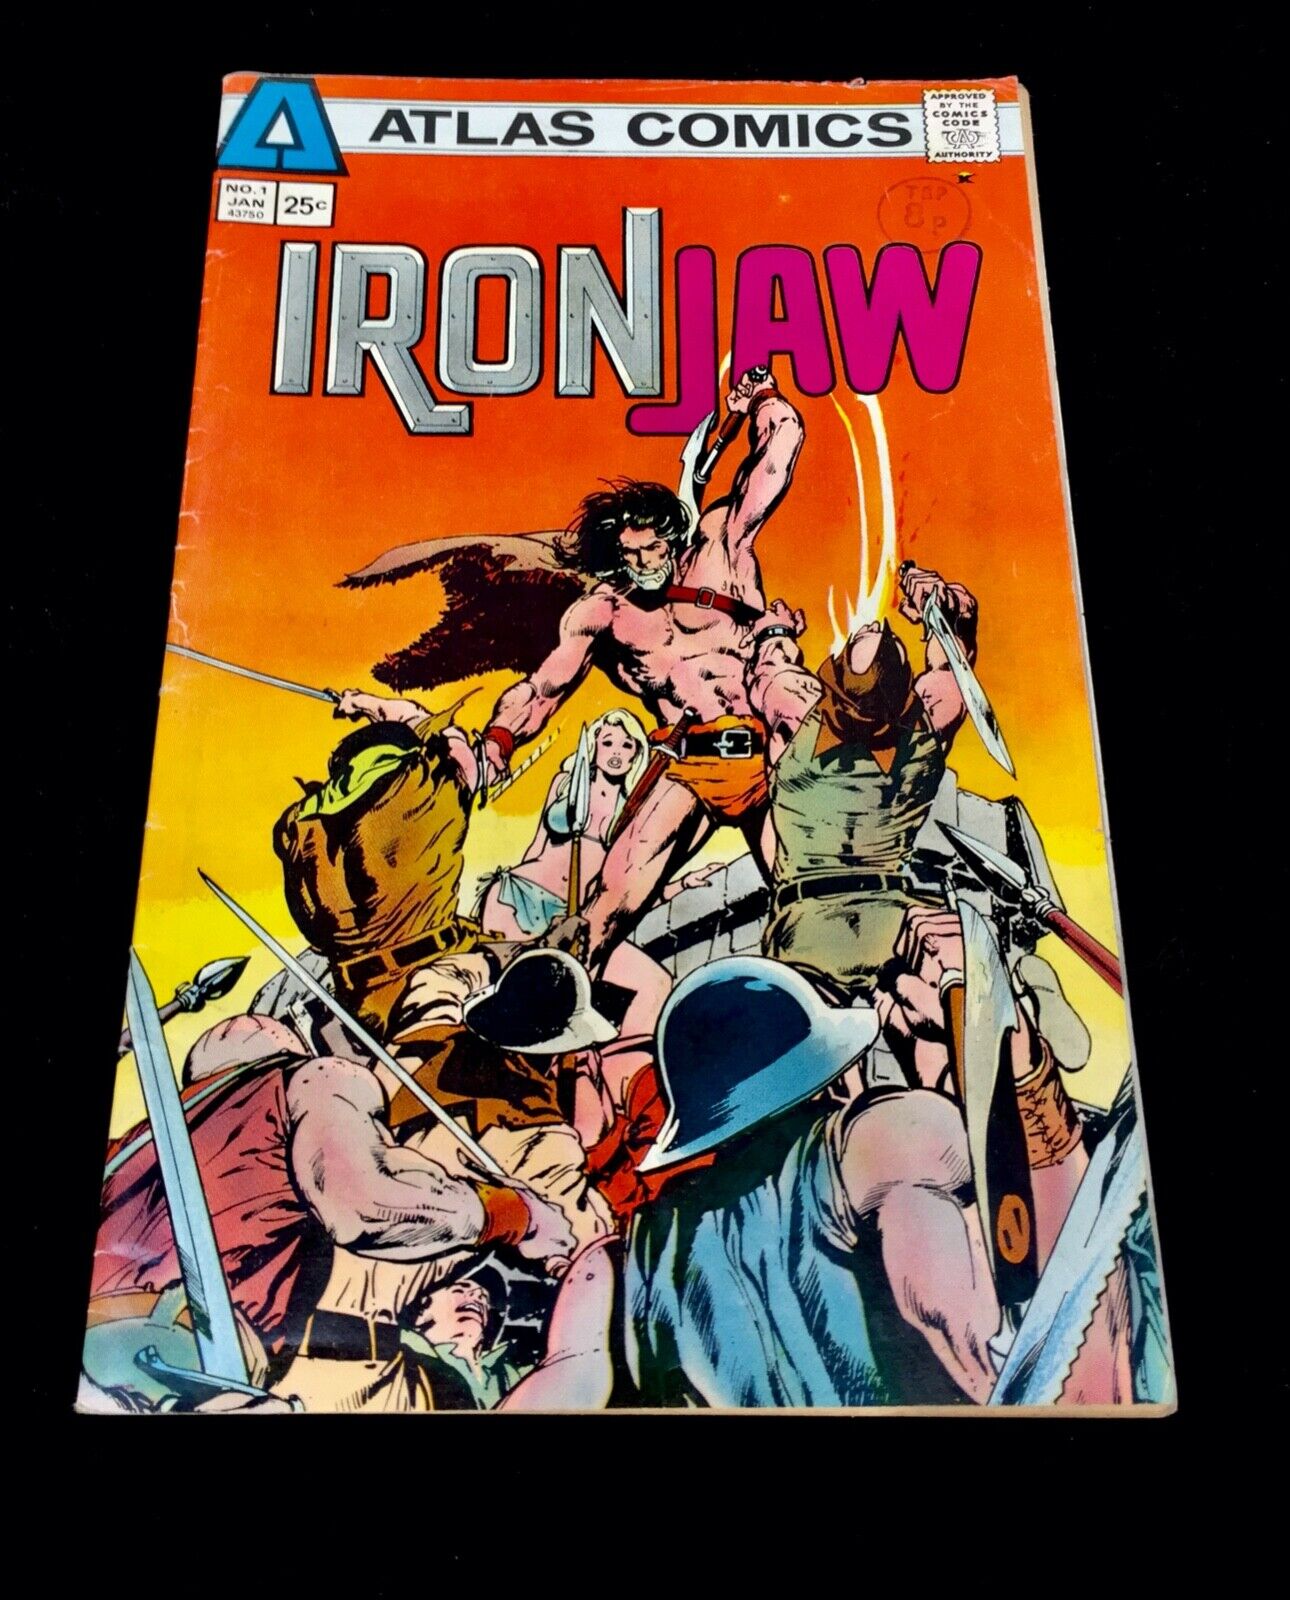 Iron jaw #1 1975 Key ATLAS Comics 1st Appearance of Ironjaw Comic CGC 9.6